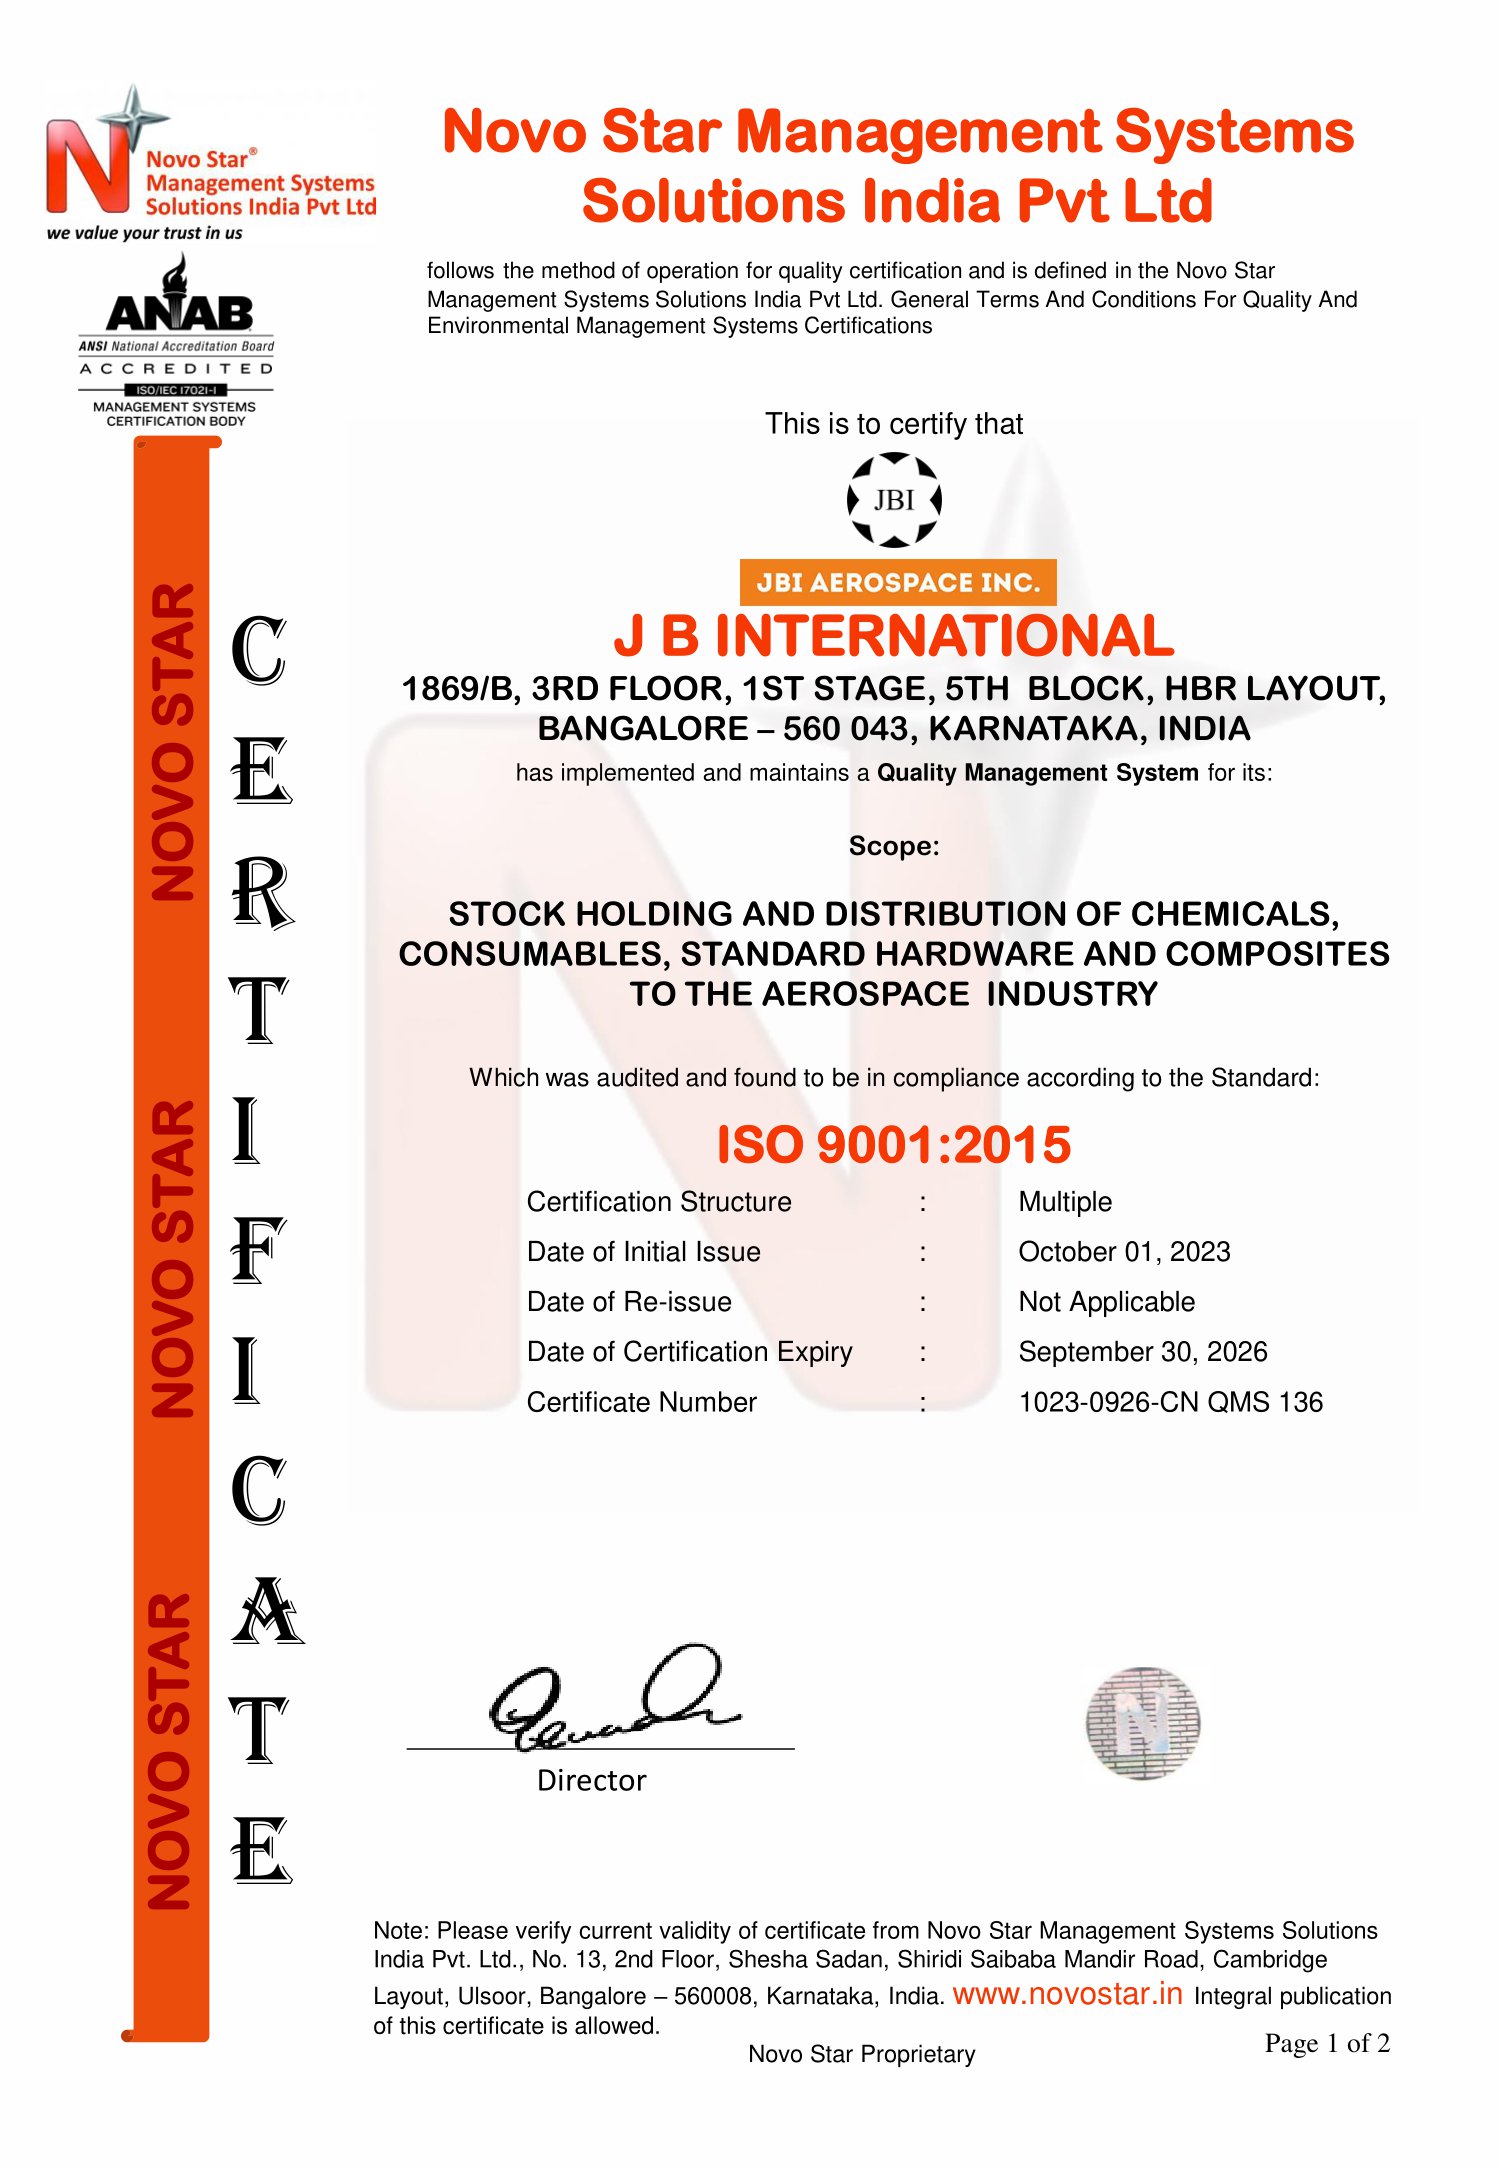 jbi certificate